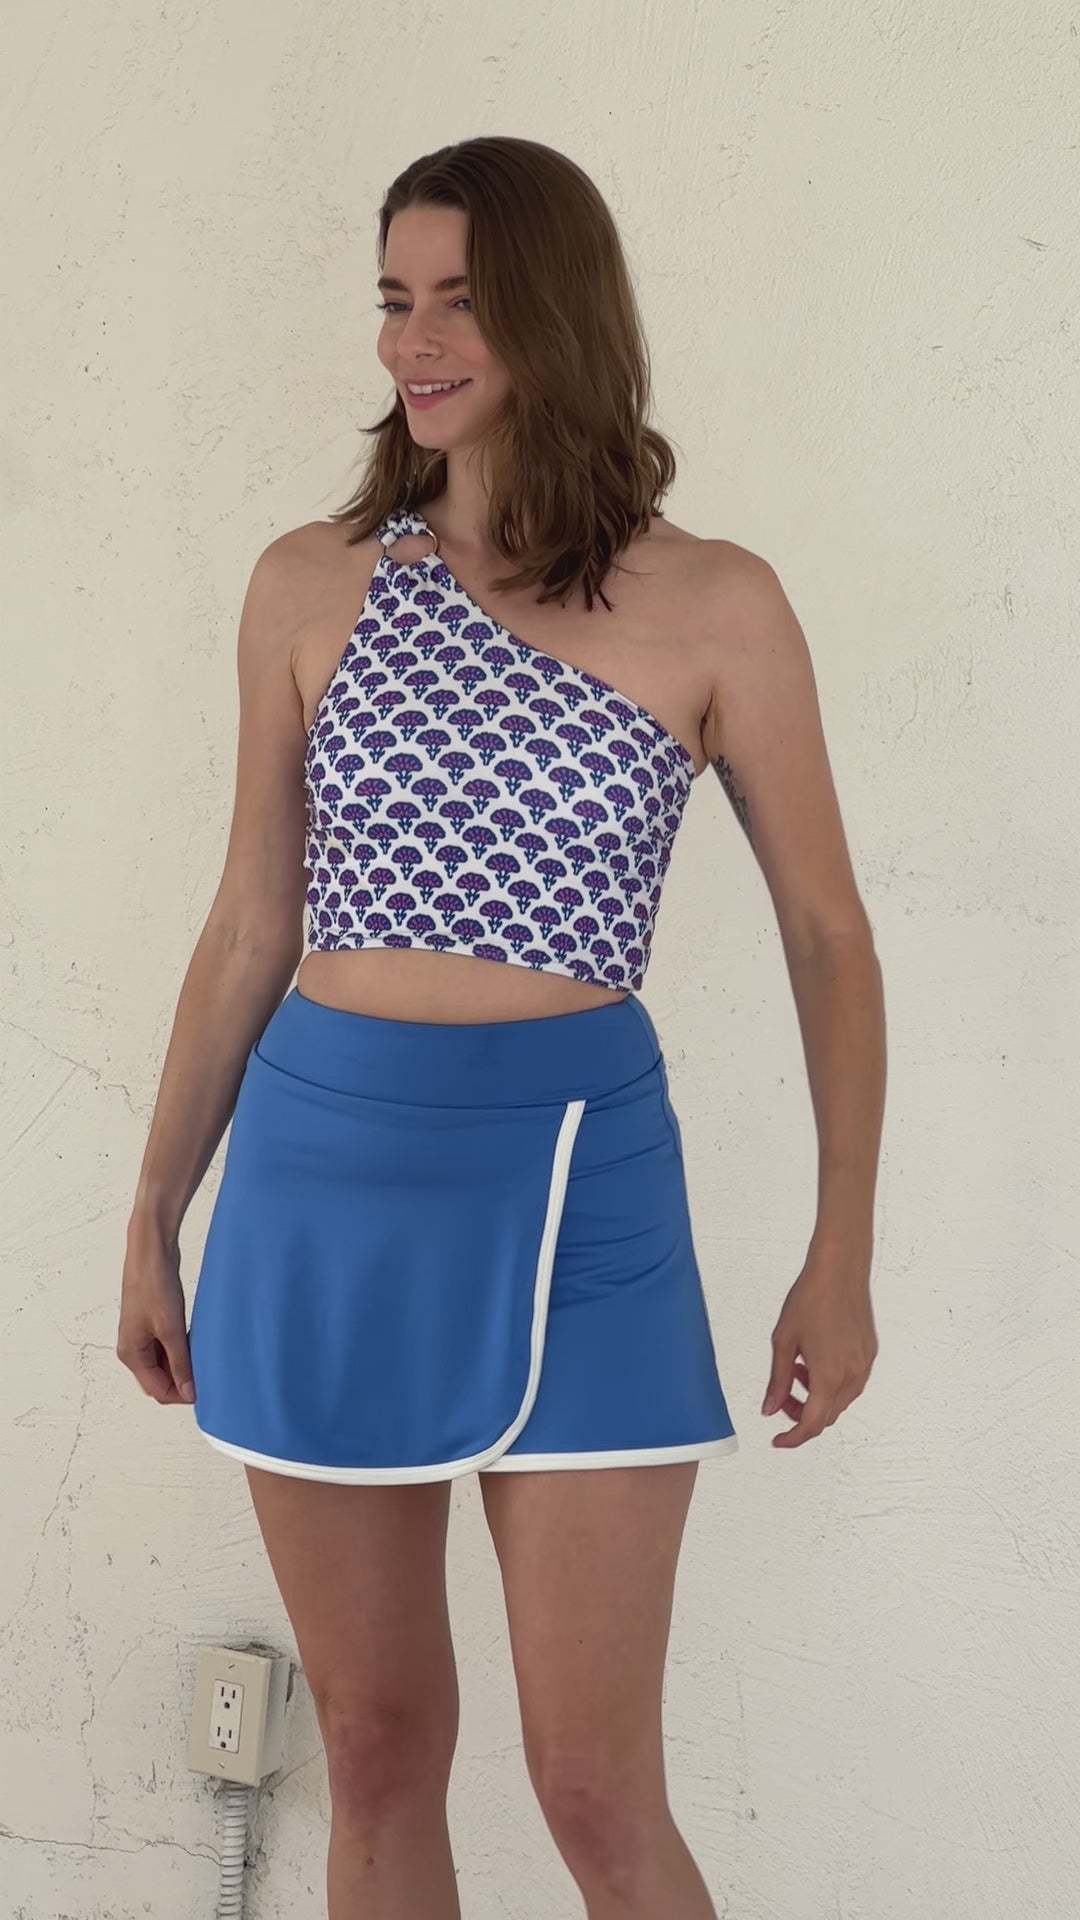 Lime Ricki Women's Capri Classic Skirt W/ Bottoms - 2x : Target